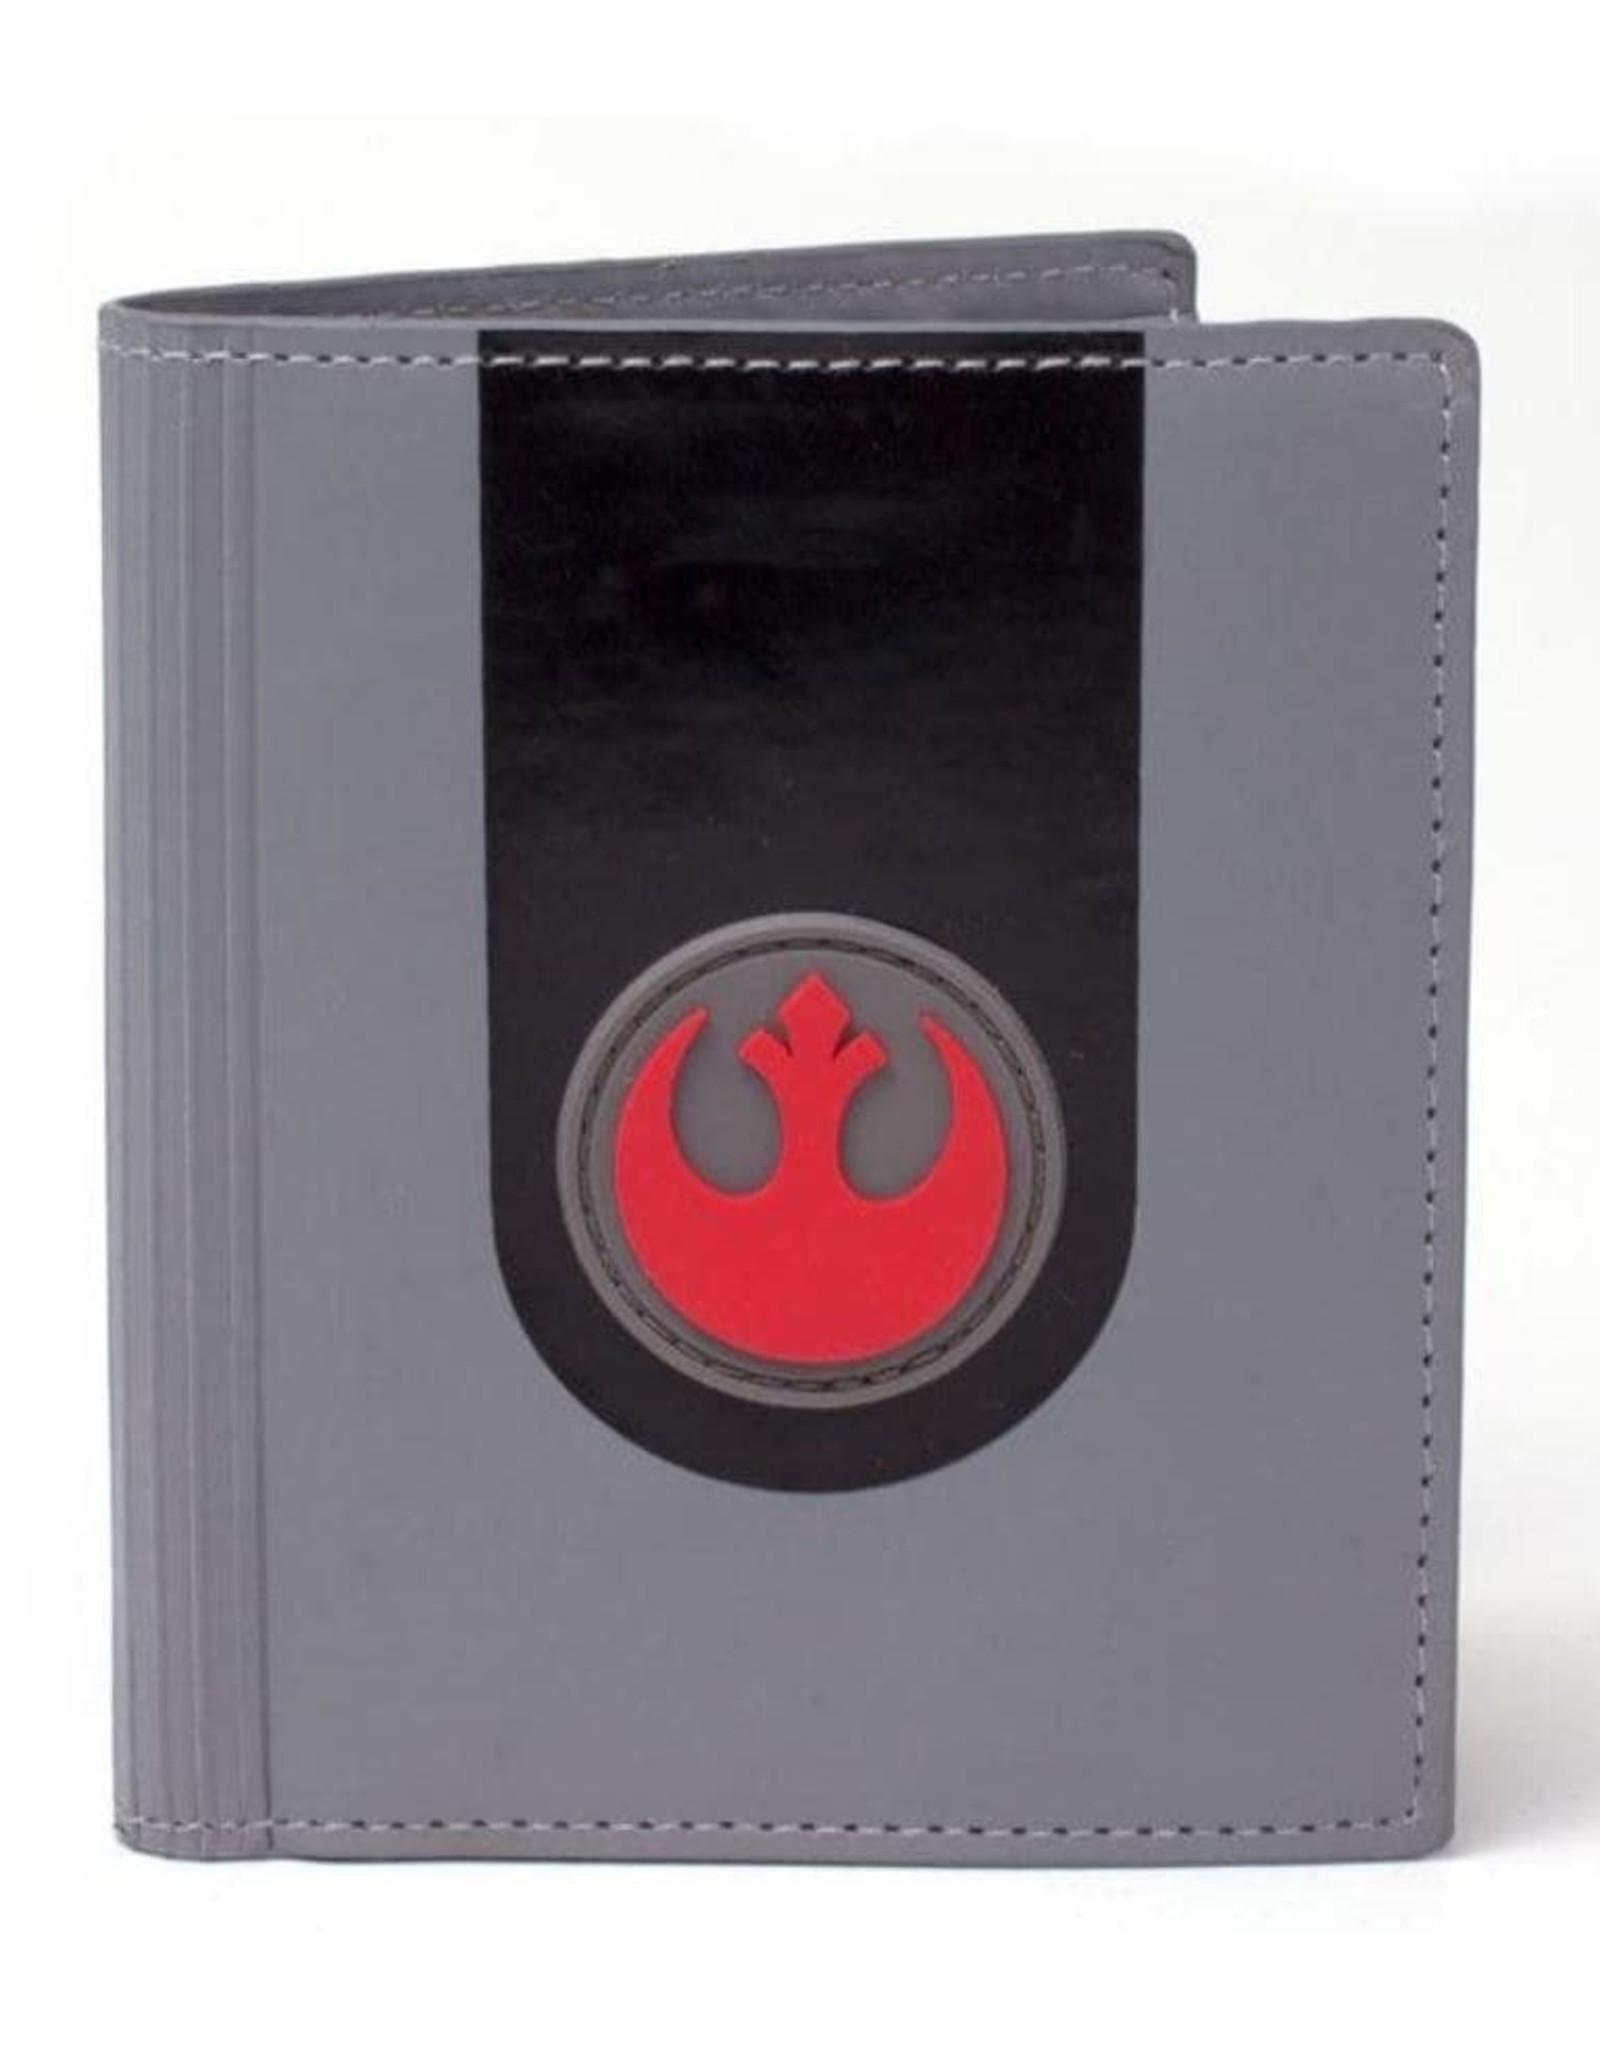 Star Wars Star Wars bags - Star Wars Episode VIII Pilot inspired wallet